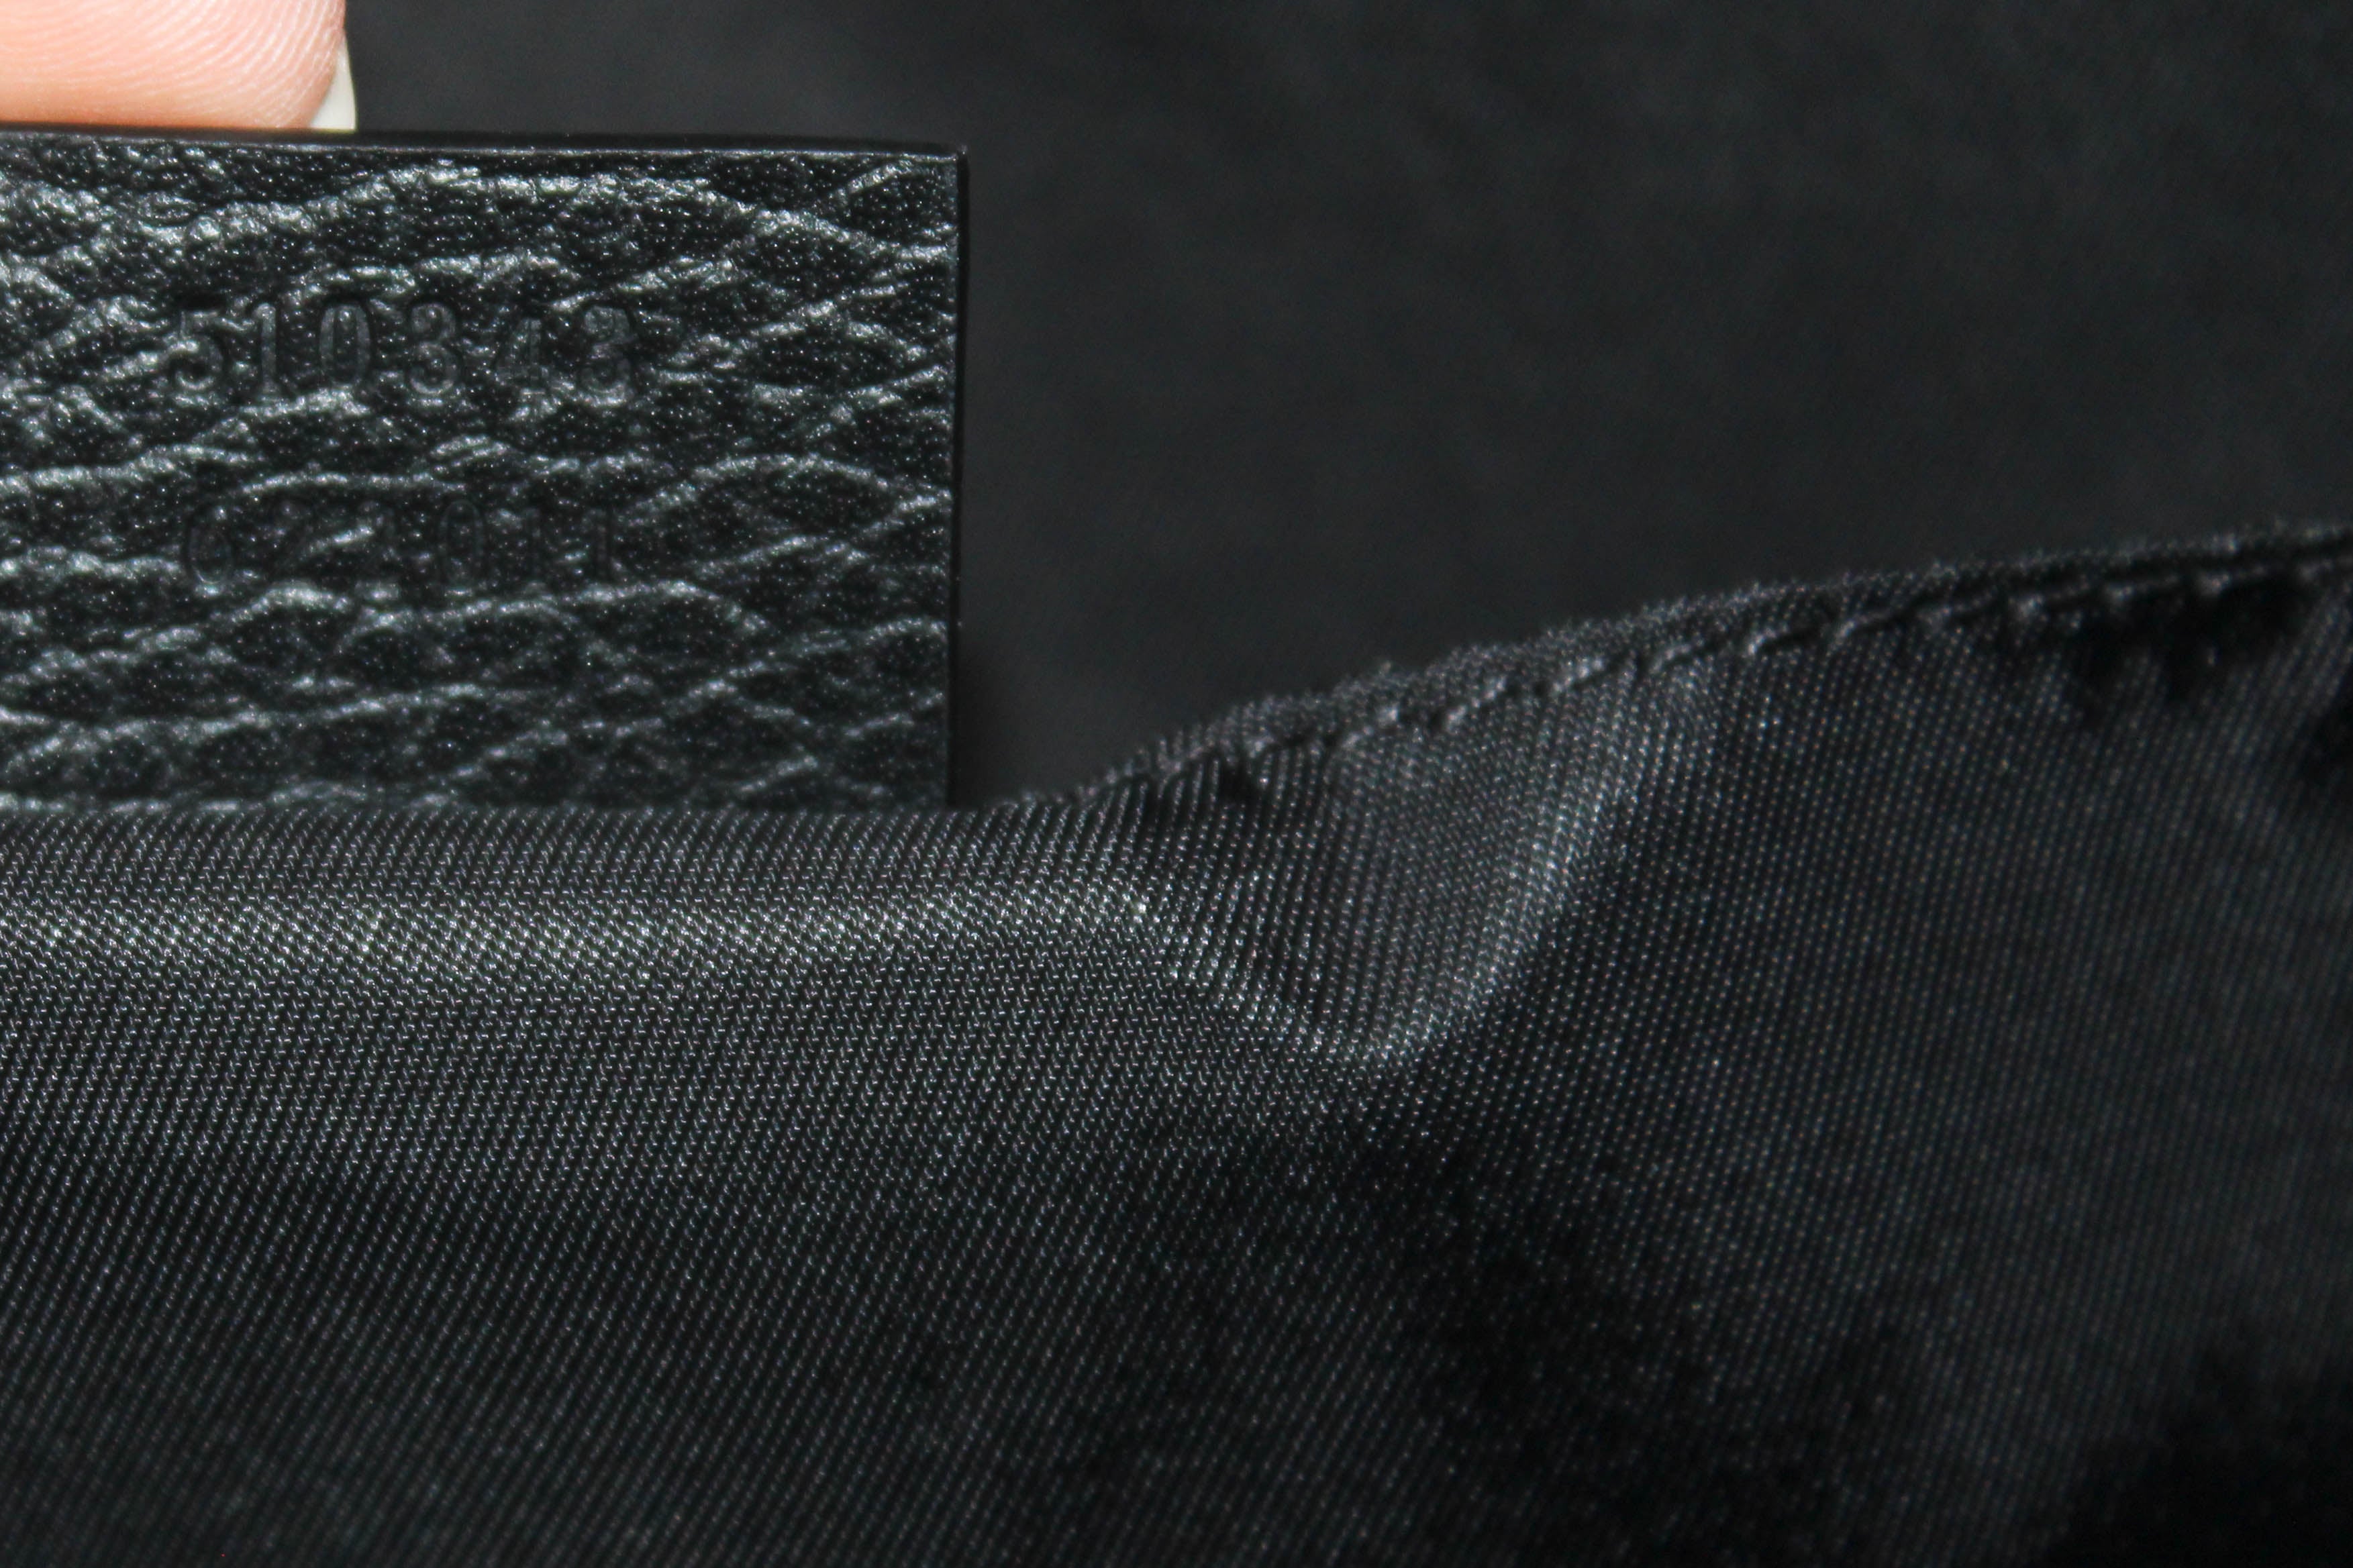 Authentic New Gucci Black Classic GG Monogram Nylon Backpack 510343